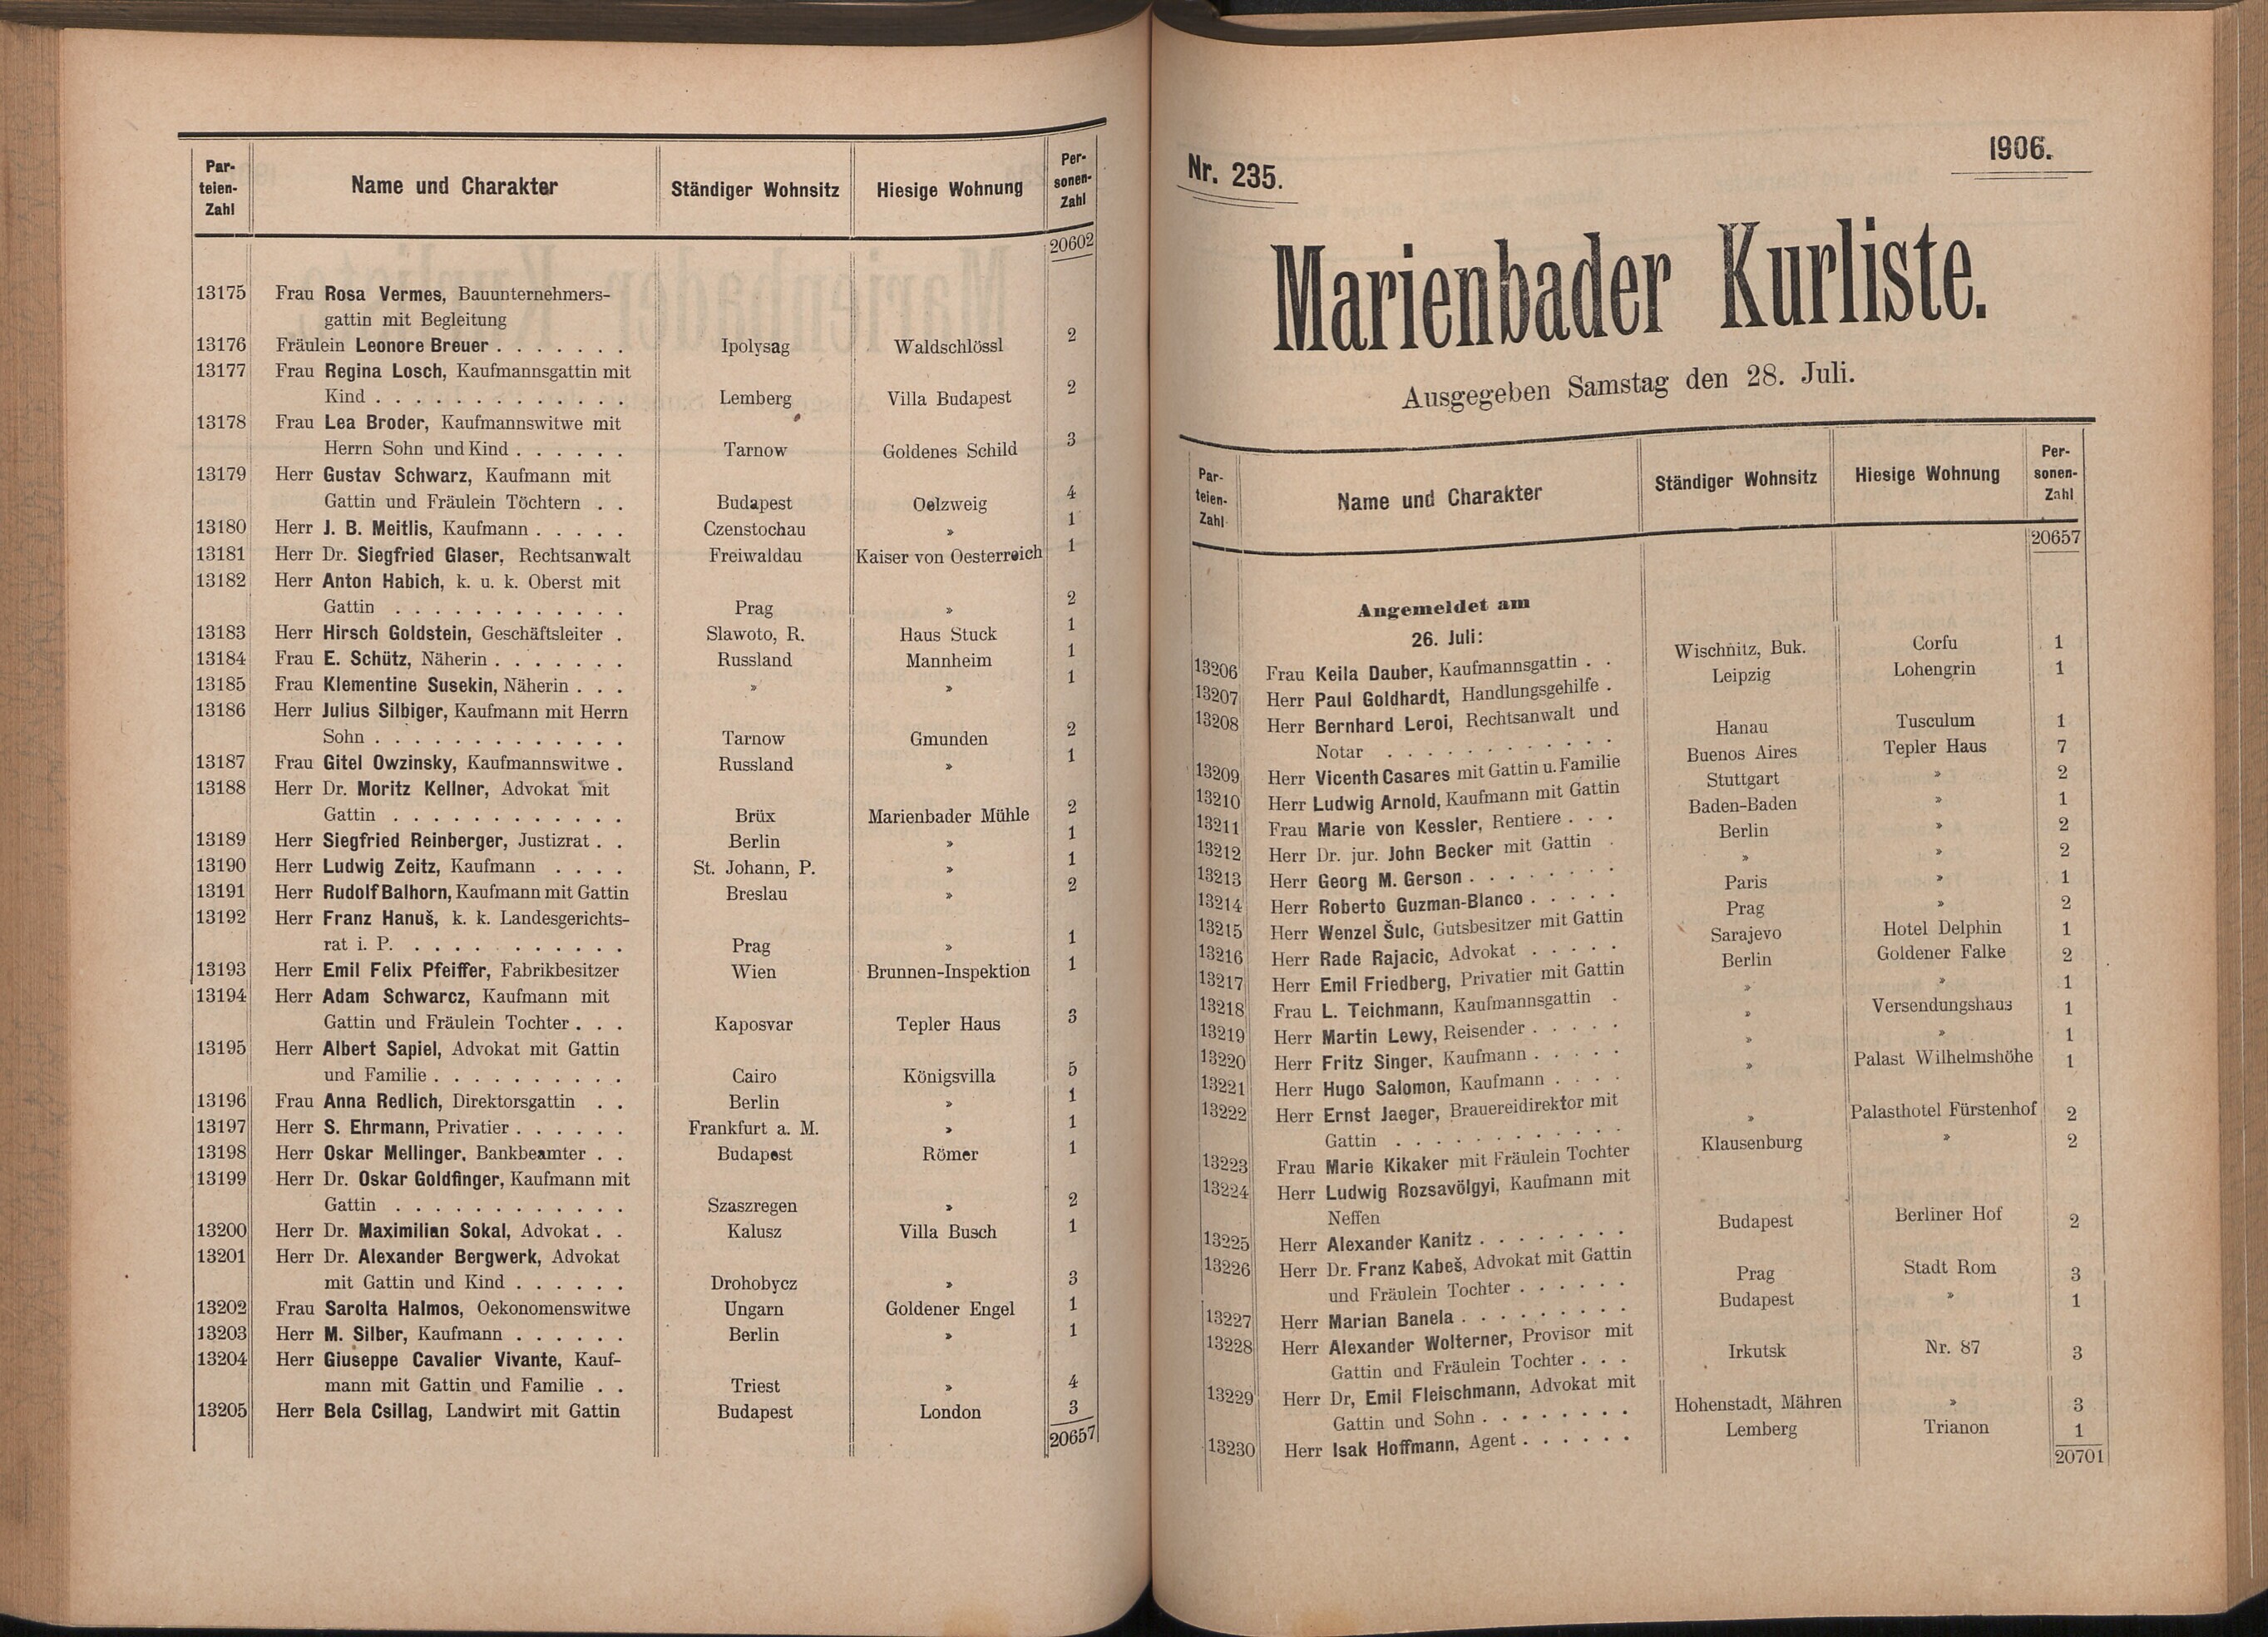 314. soap-ch_knihovna_marienbader-kurliste-1906_3140